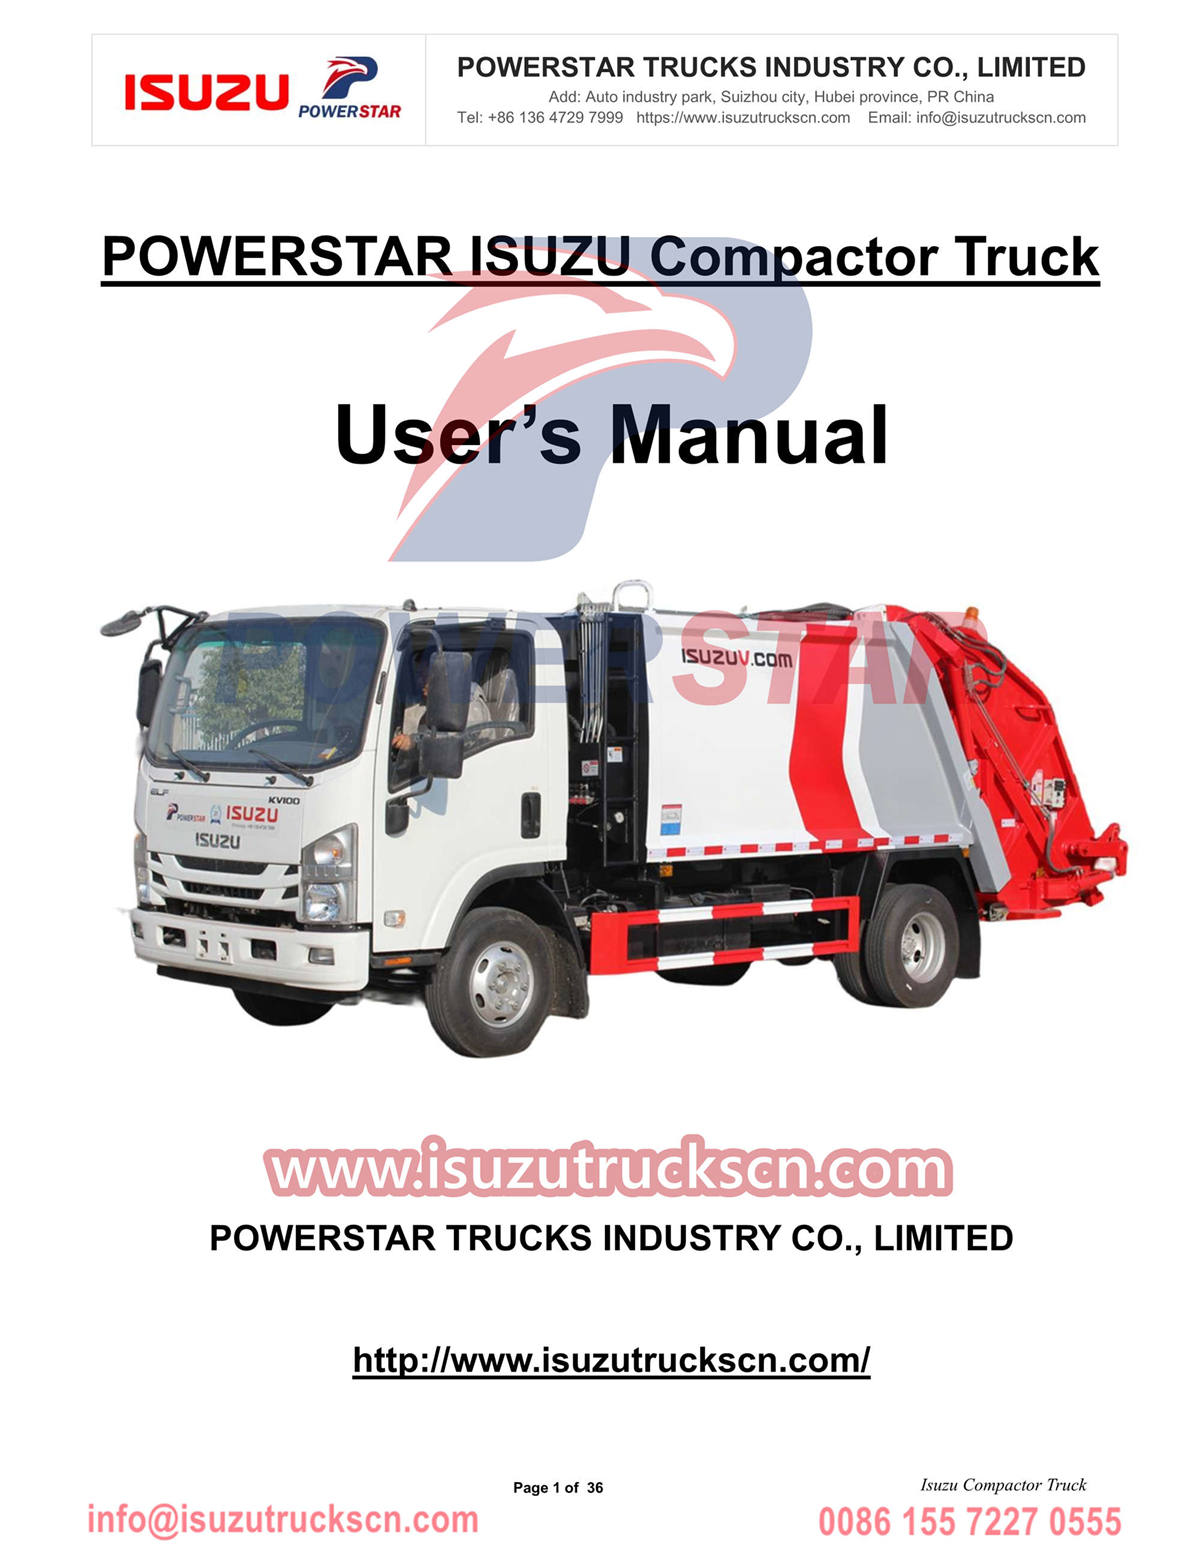 Moldova customer buy POWERSTAR Isuzu 6cbm Compactor Truck